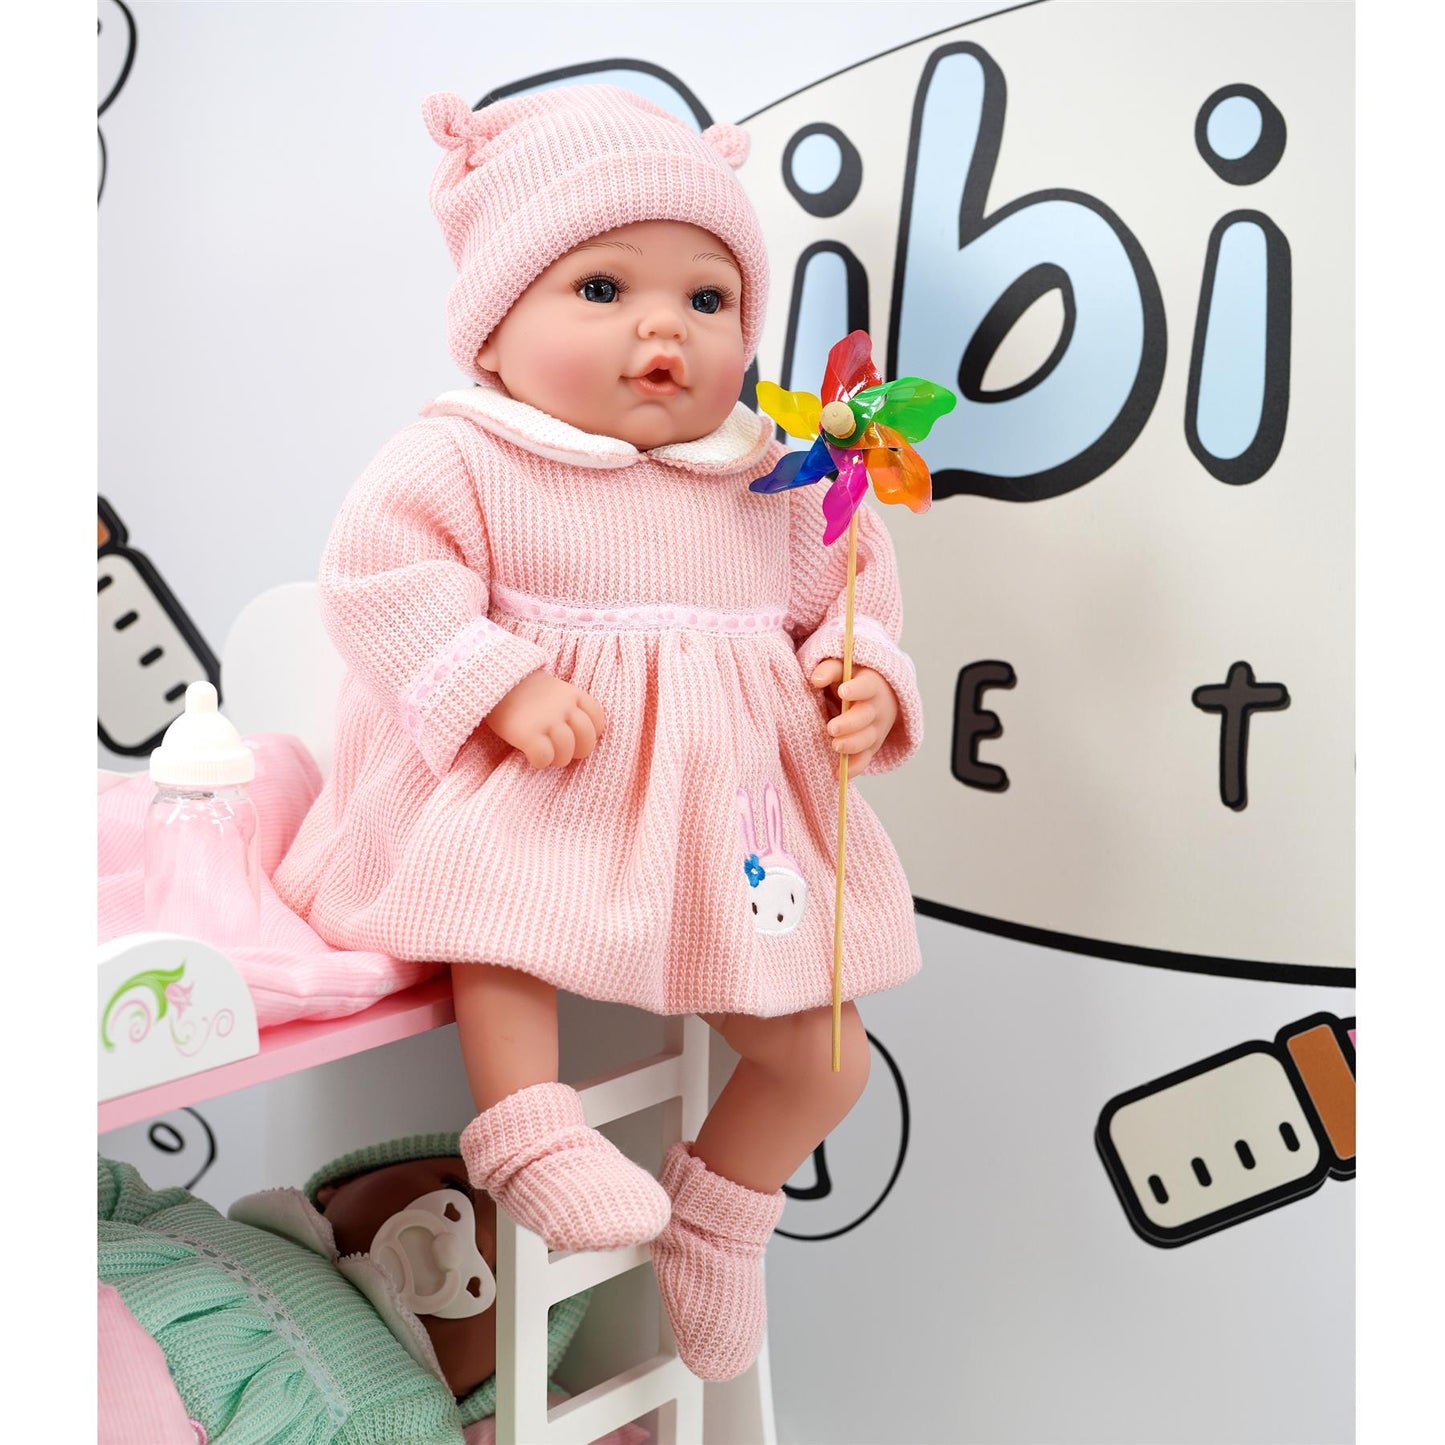 BiBi Outfits - Reborn Doll Clothes (Pink Dress) (50 cm / 20") by BiBi Doll - UKBuyZone